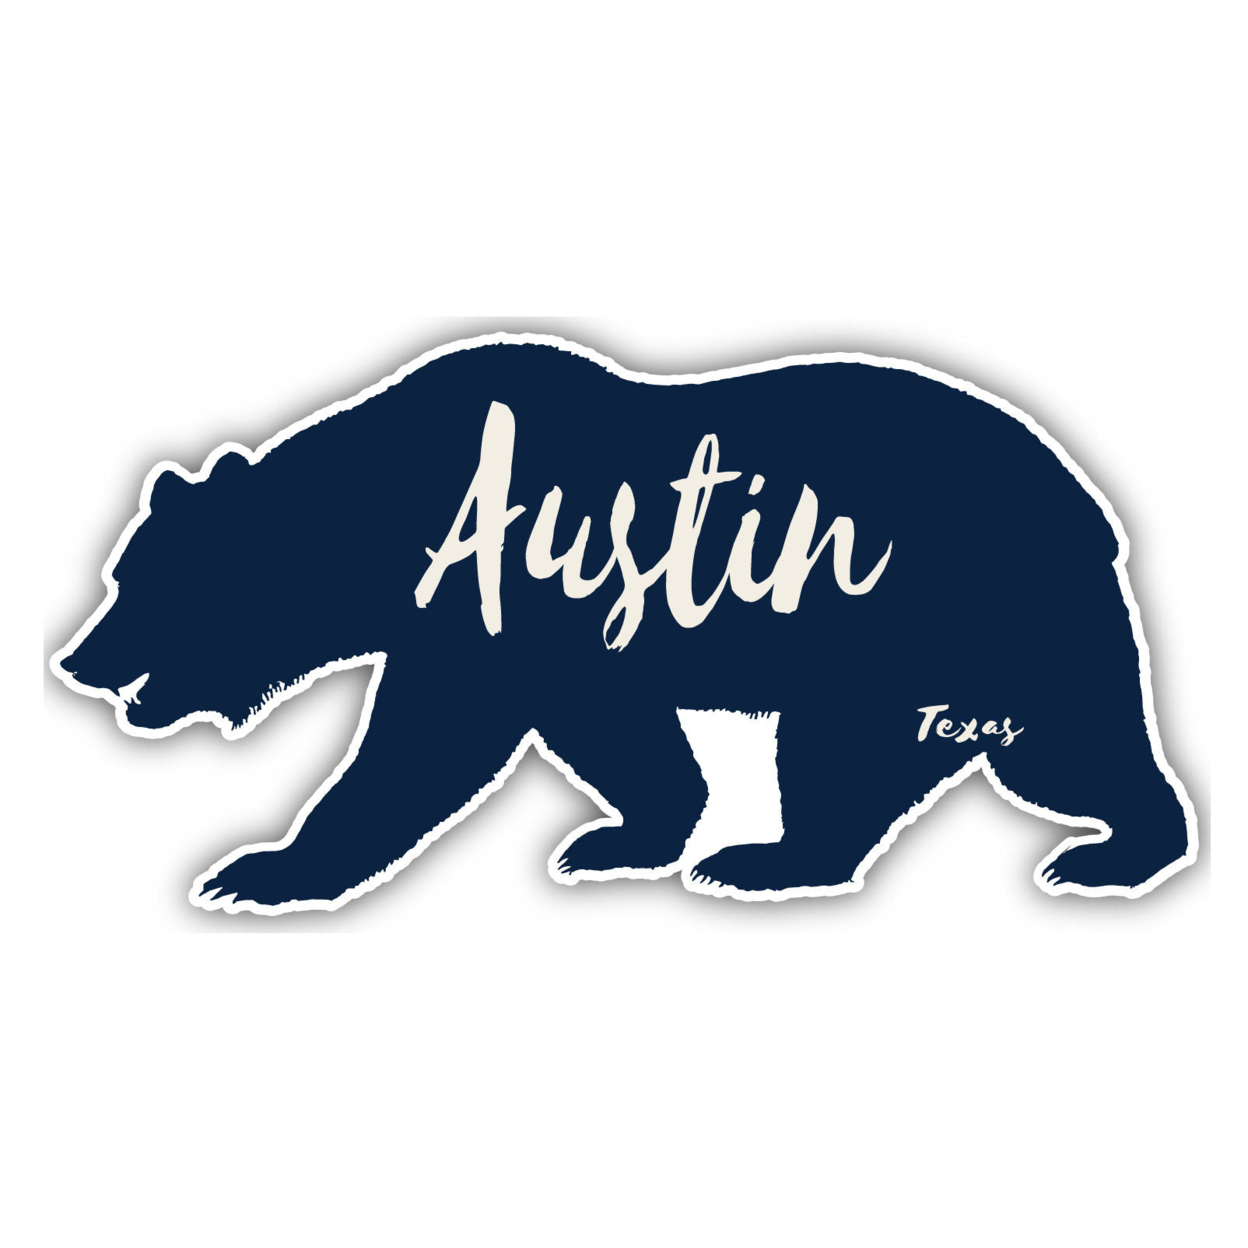 Austin Texas Souvenir Decorative Stickers (Choose Theme And Size) - 4-Pack, 4-Inch, Bear